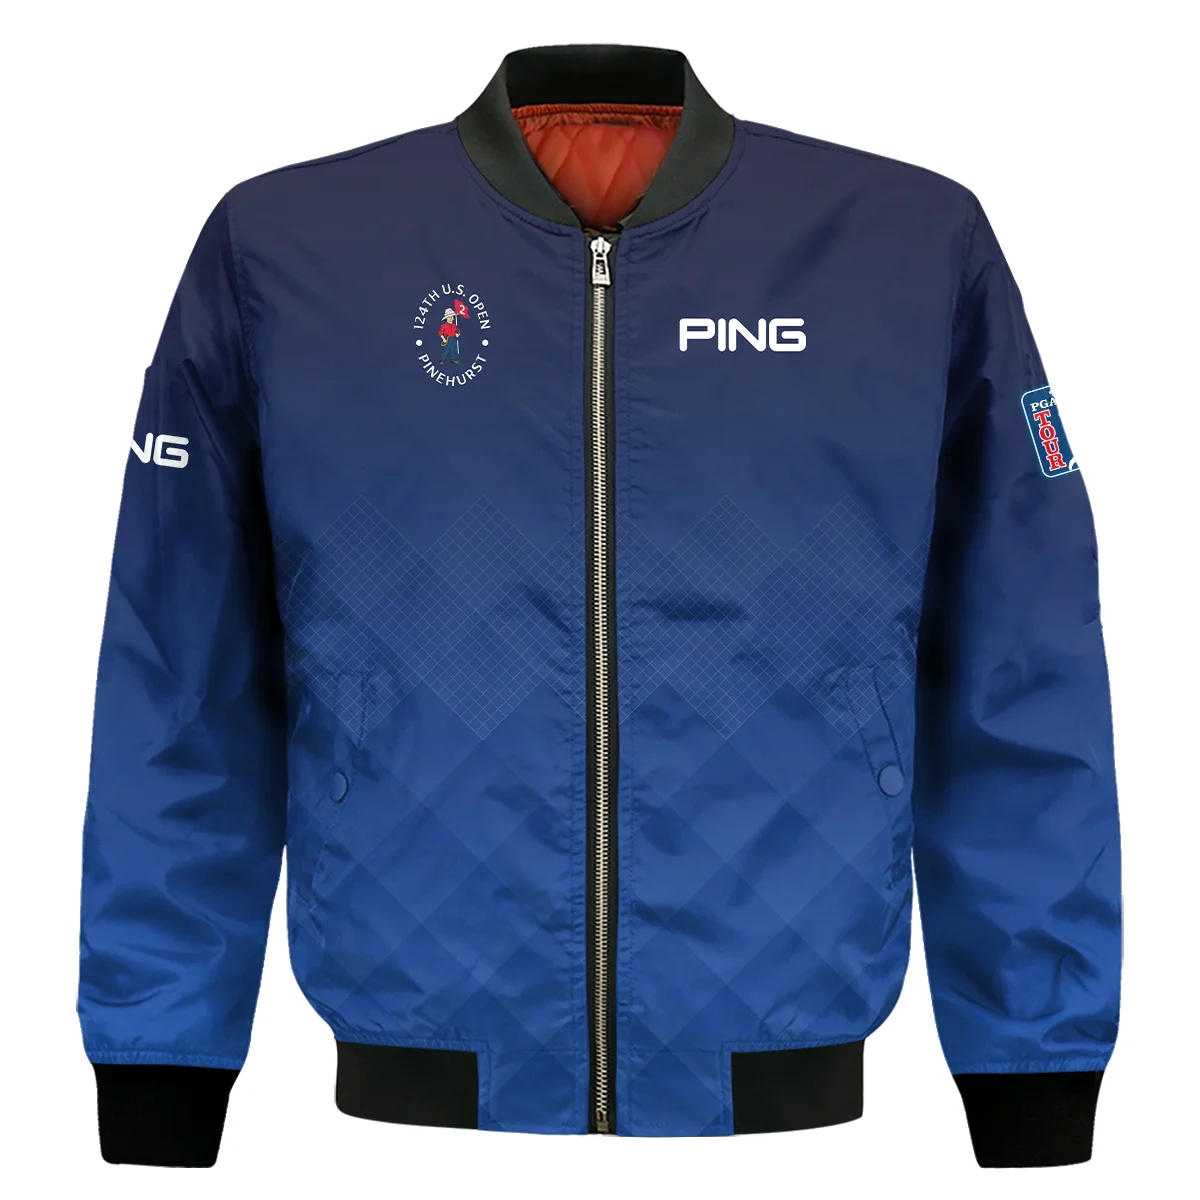 124th U.S. Open Pinehurst Ping Dark Blue Gradient Stripes Pattern Sleeveless Jacket Style Classic Sleeveless Jacket